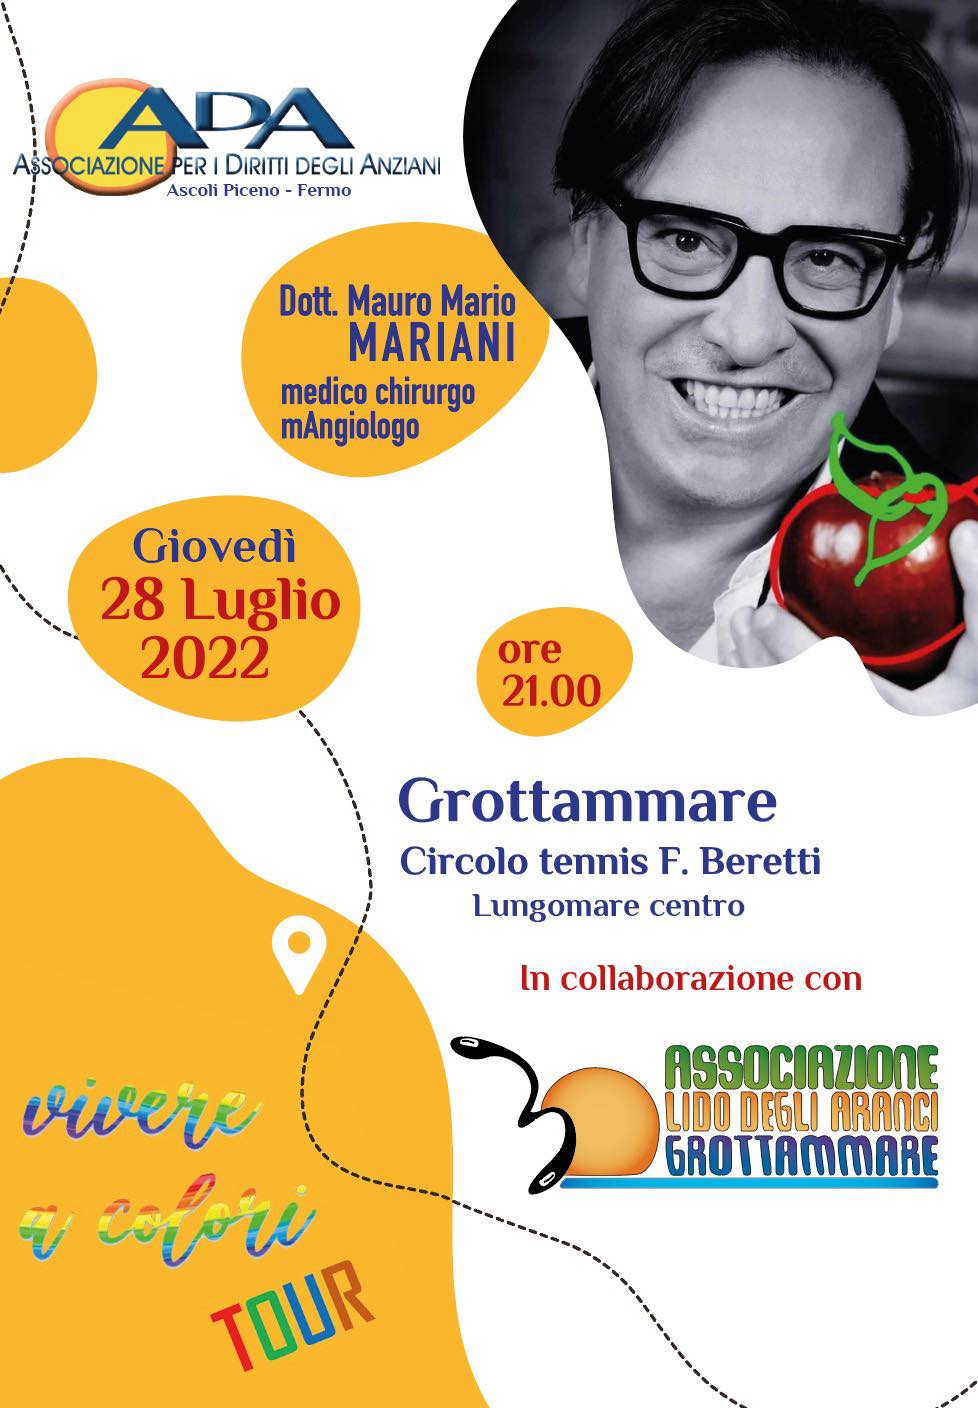 Mauro Mario Mariani, “#vivereacolori” @ “Librarsi”